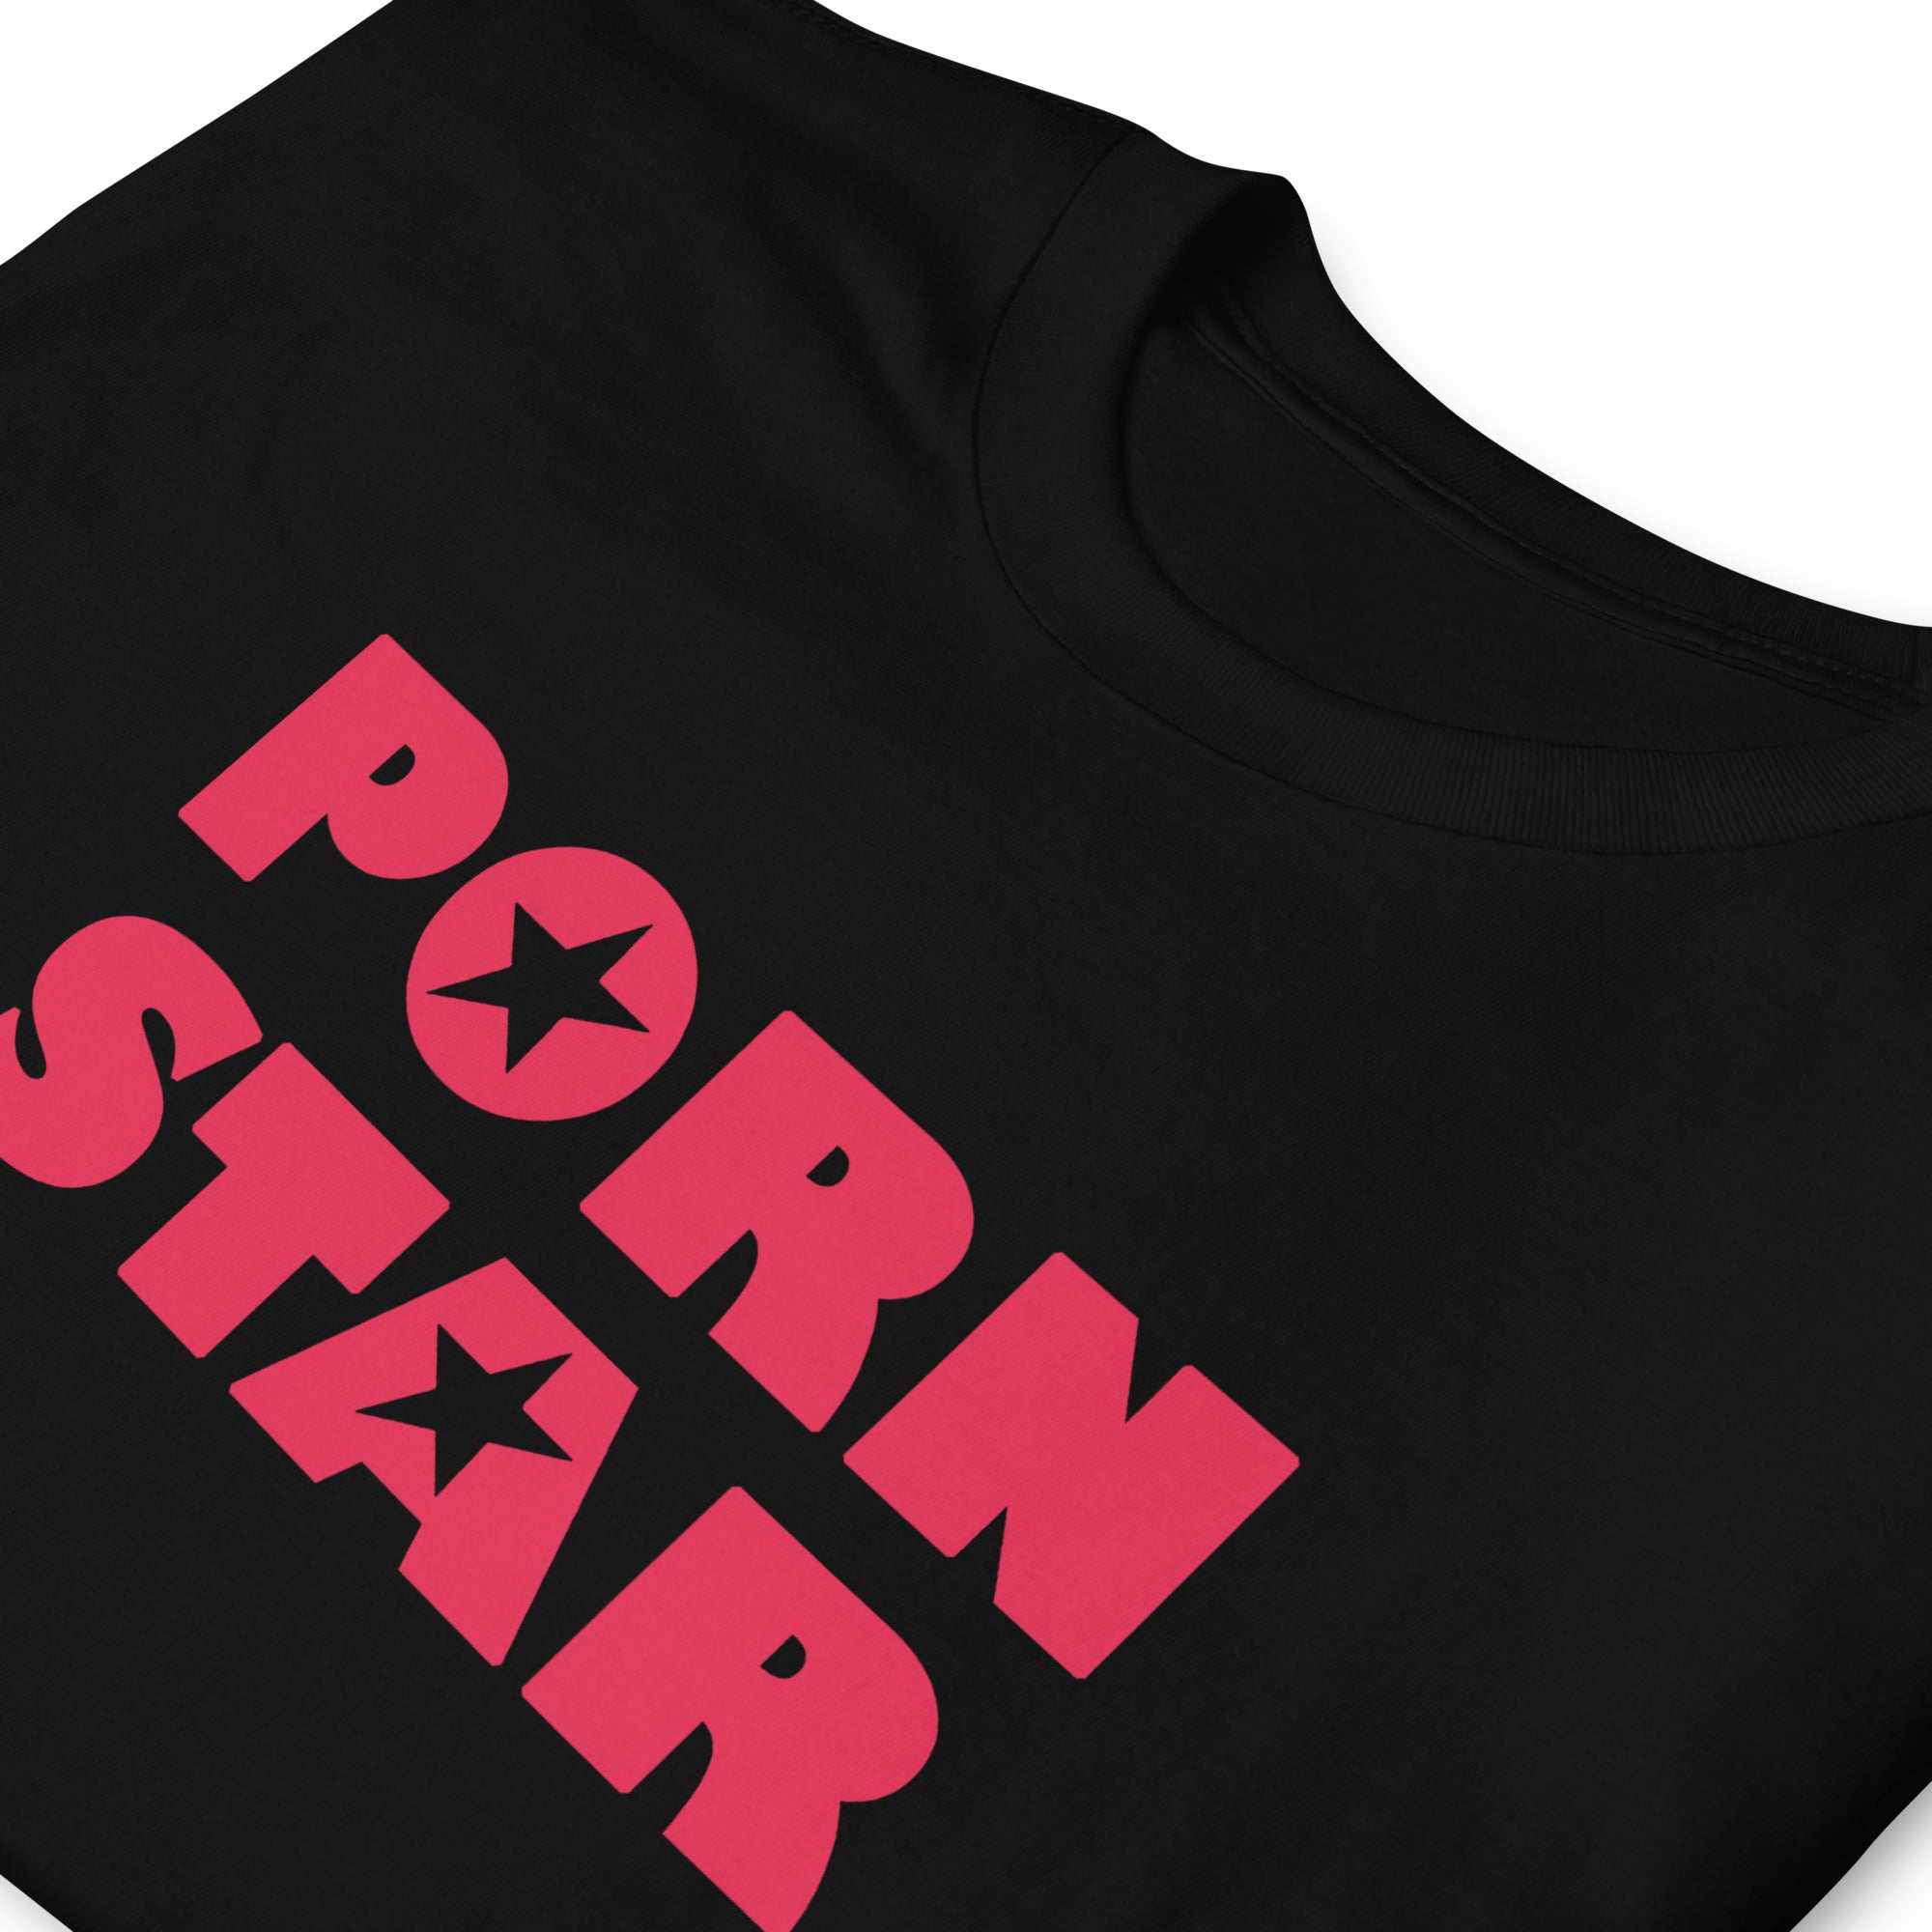 Red Porn Star Logo Short-Sleeve T-Shirt